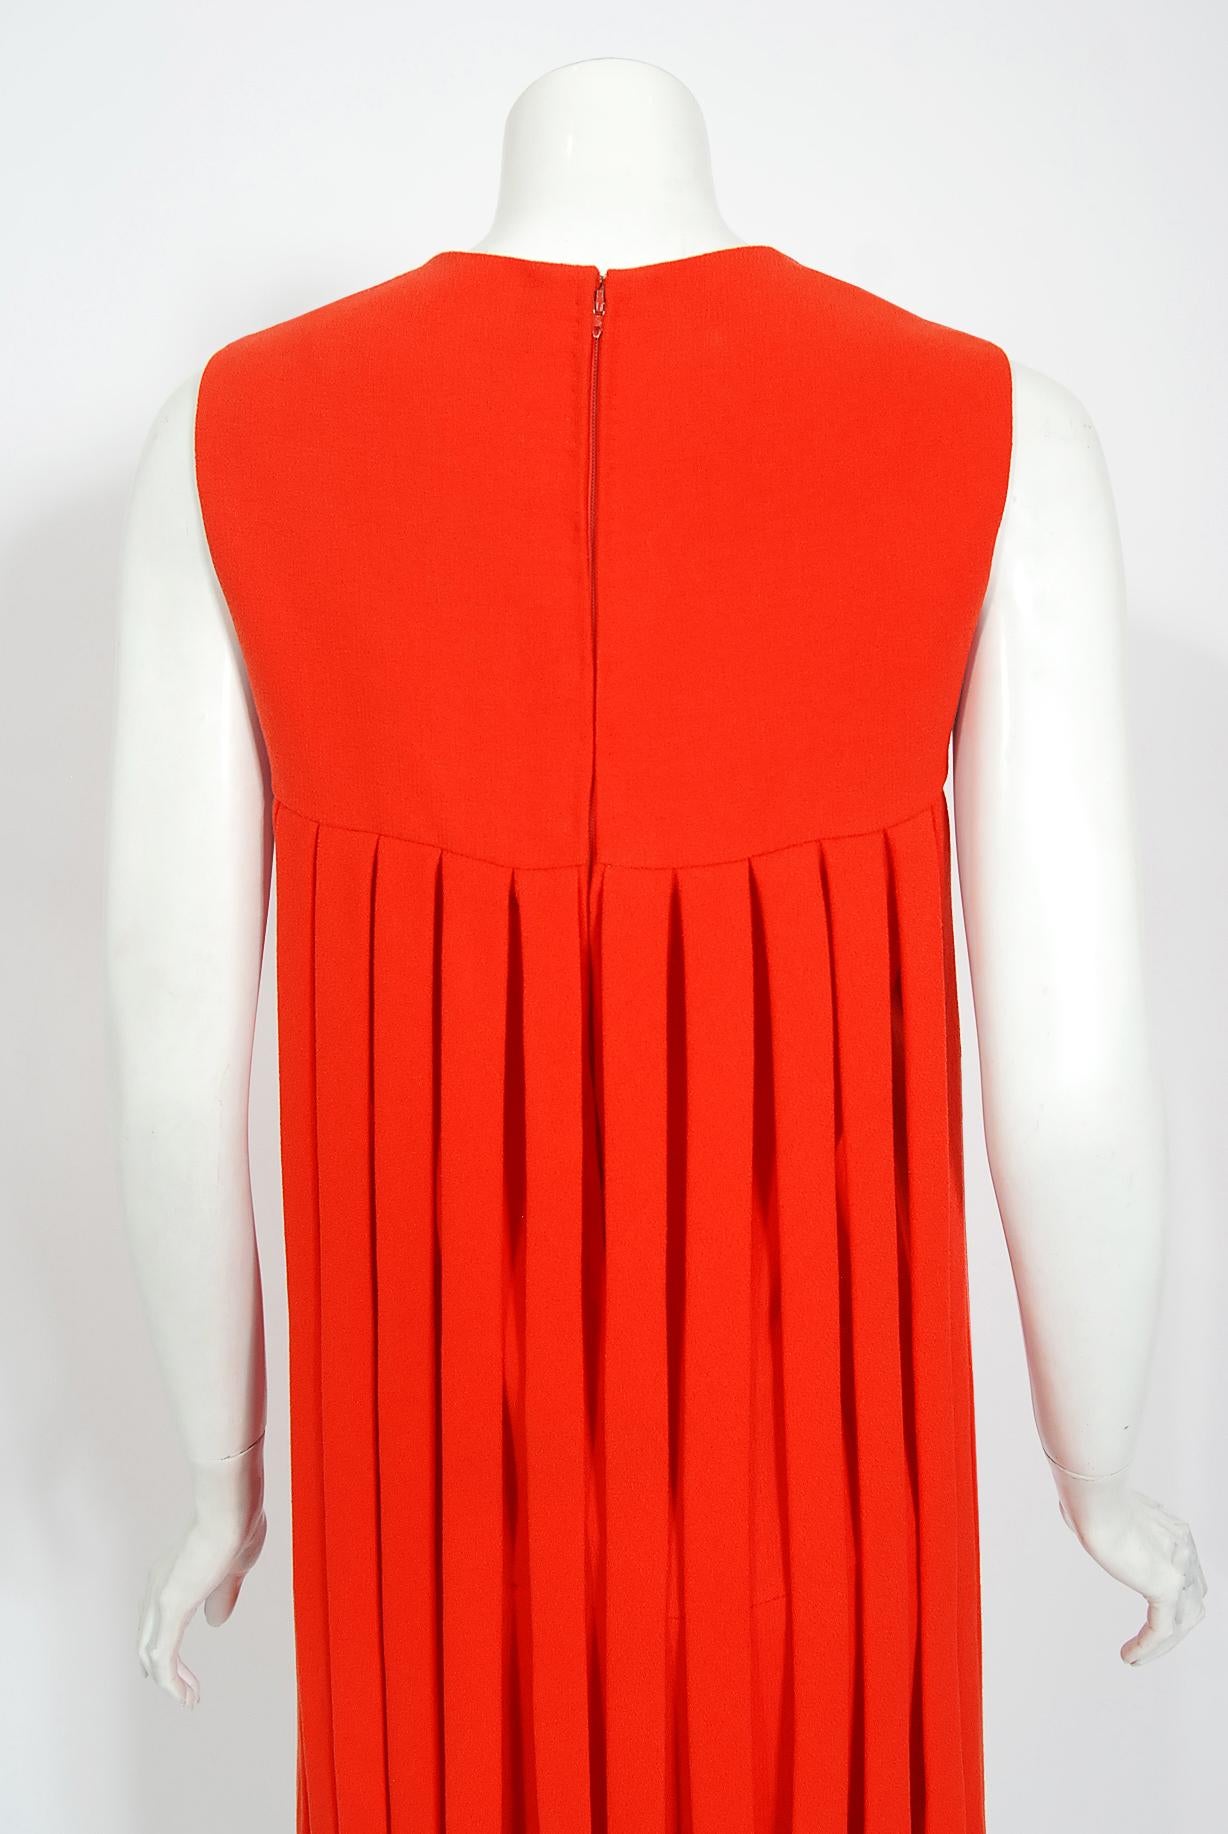 Vintage 1967 Pierre Cardin Documented Orange Wool Space-Age Mod Carwash Dress 4